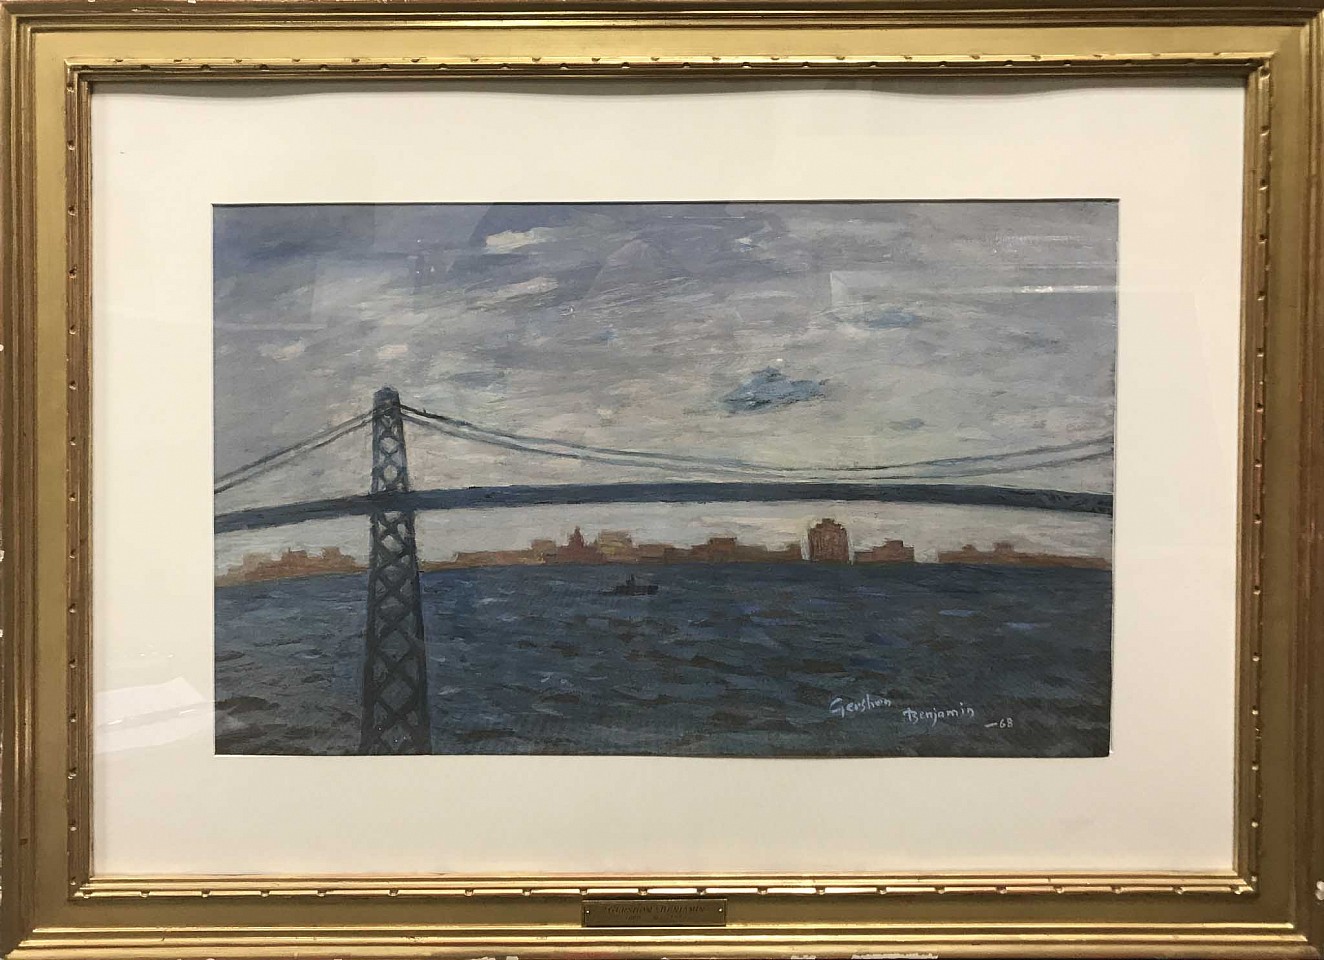 Gershon Benjamin, The Bridge, 1968
watercolor on paper, 14 1/2 x 22 in. (36.8 x 55.9 cm)
GB1803026